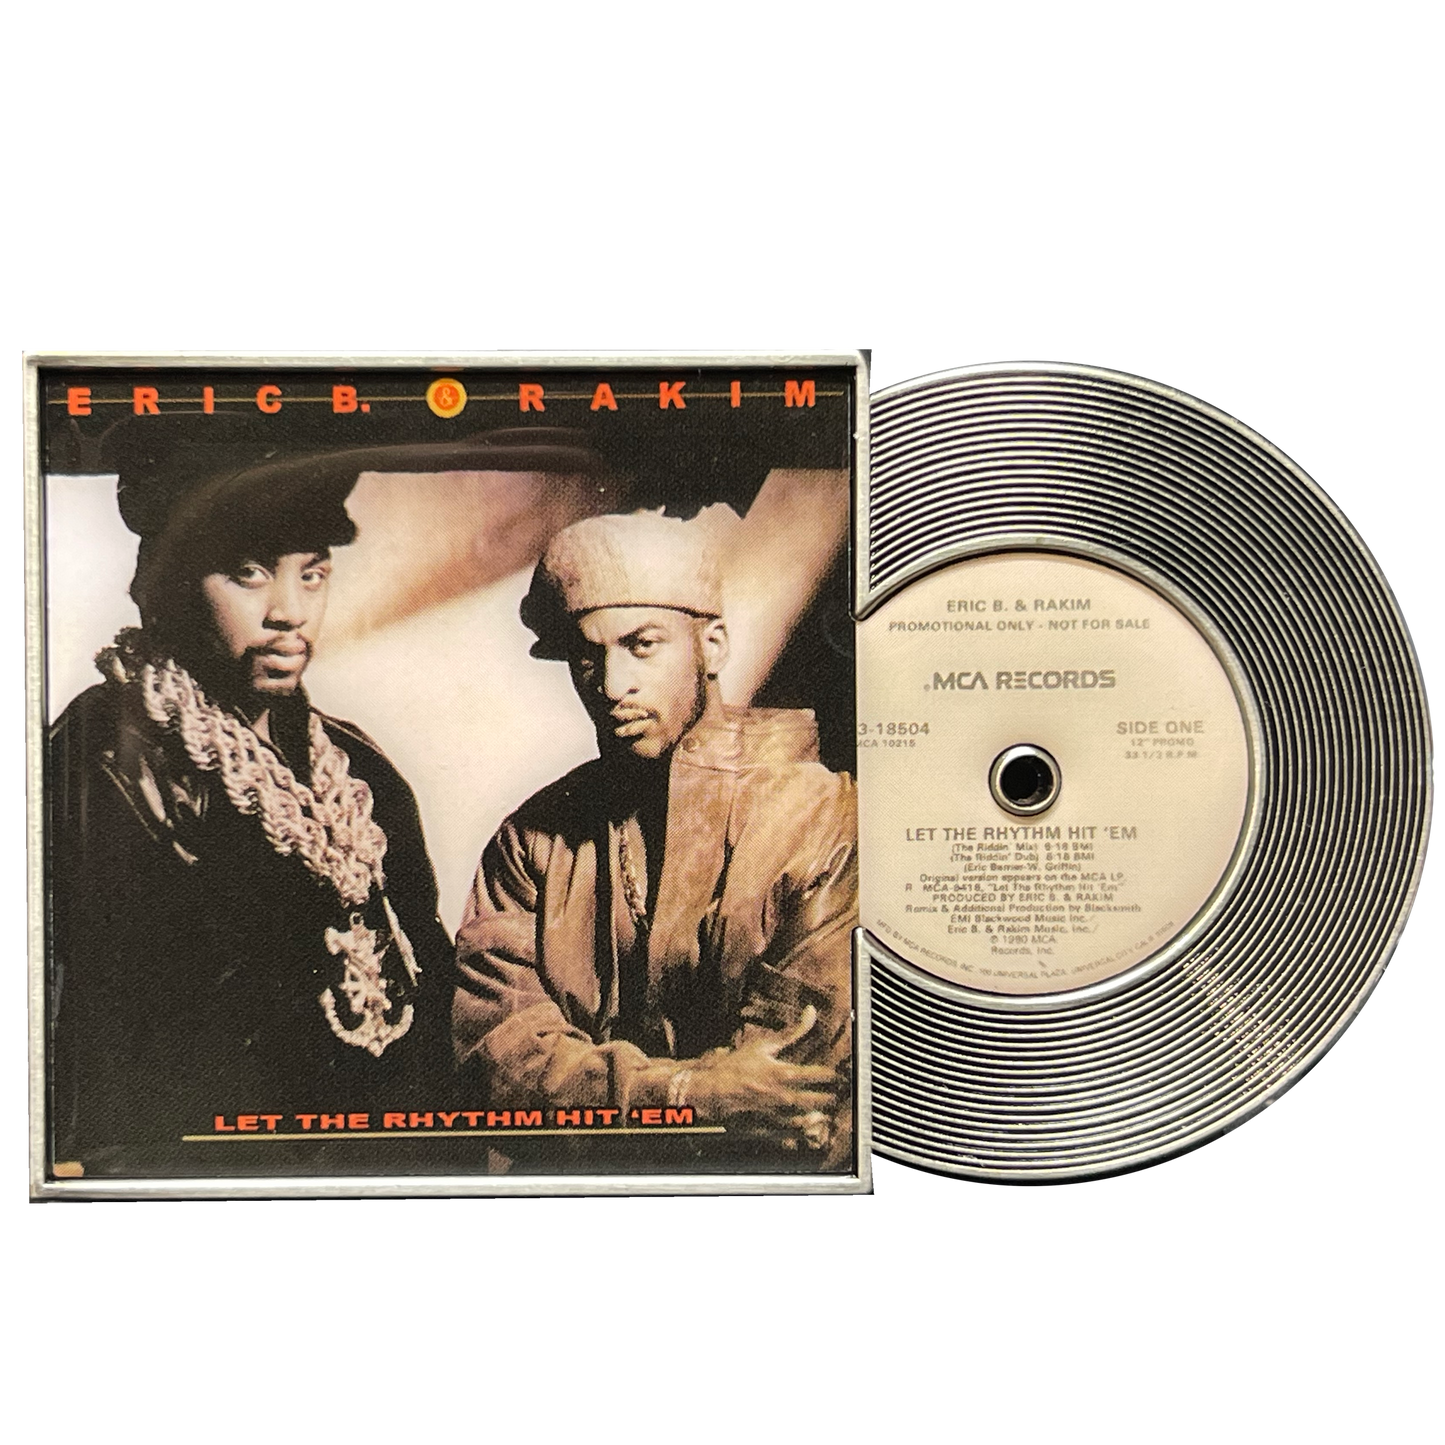 BL15-013 Eric B and Rakim Hip Hop Legends Series Commemorative Rap Record Album Jacket Coin Let the Rhythm Hit 'Em